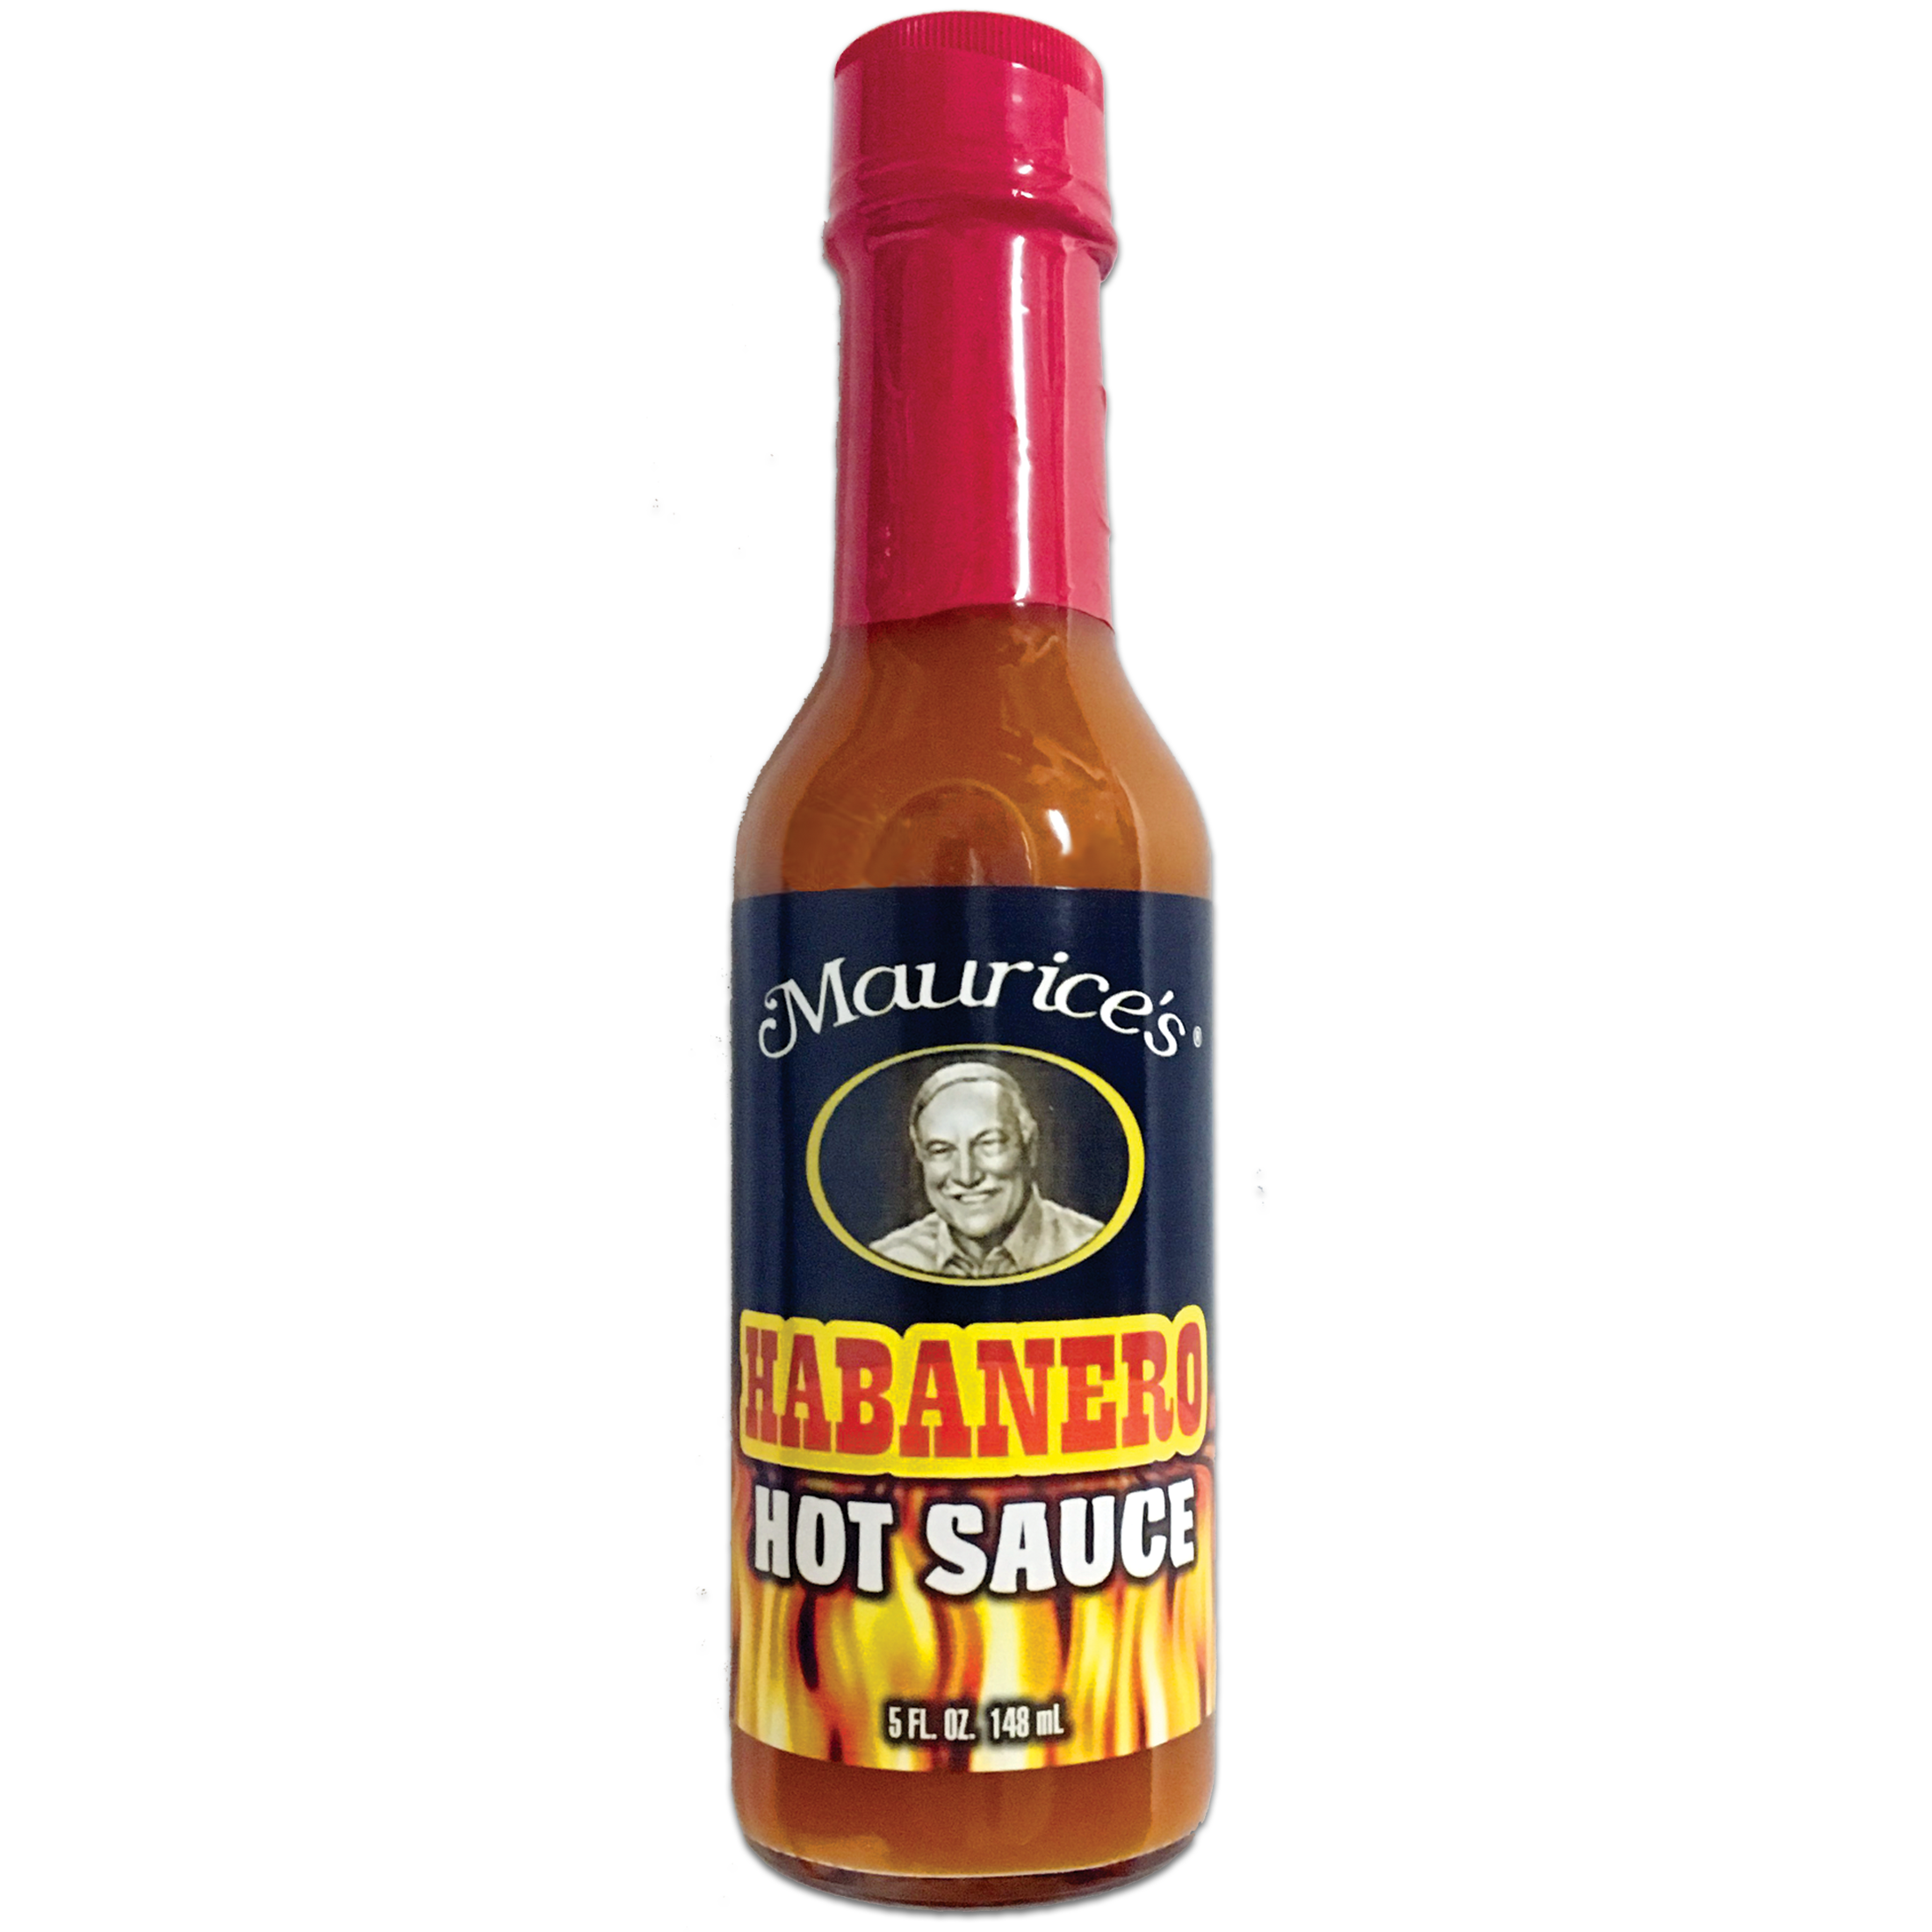 Habanero Hot Sauce